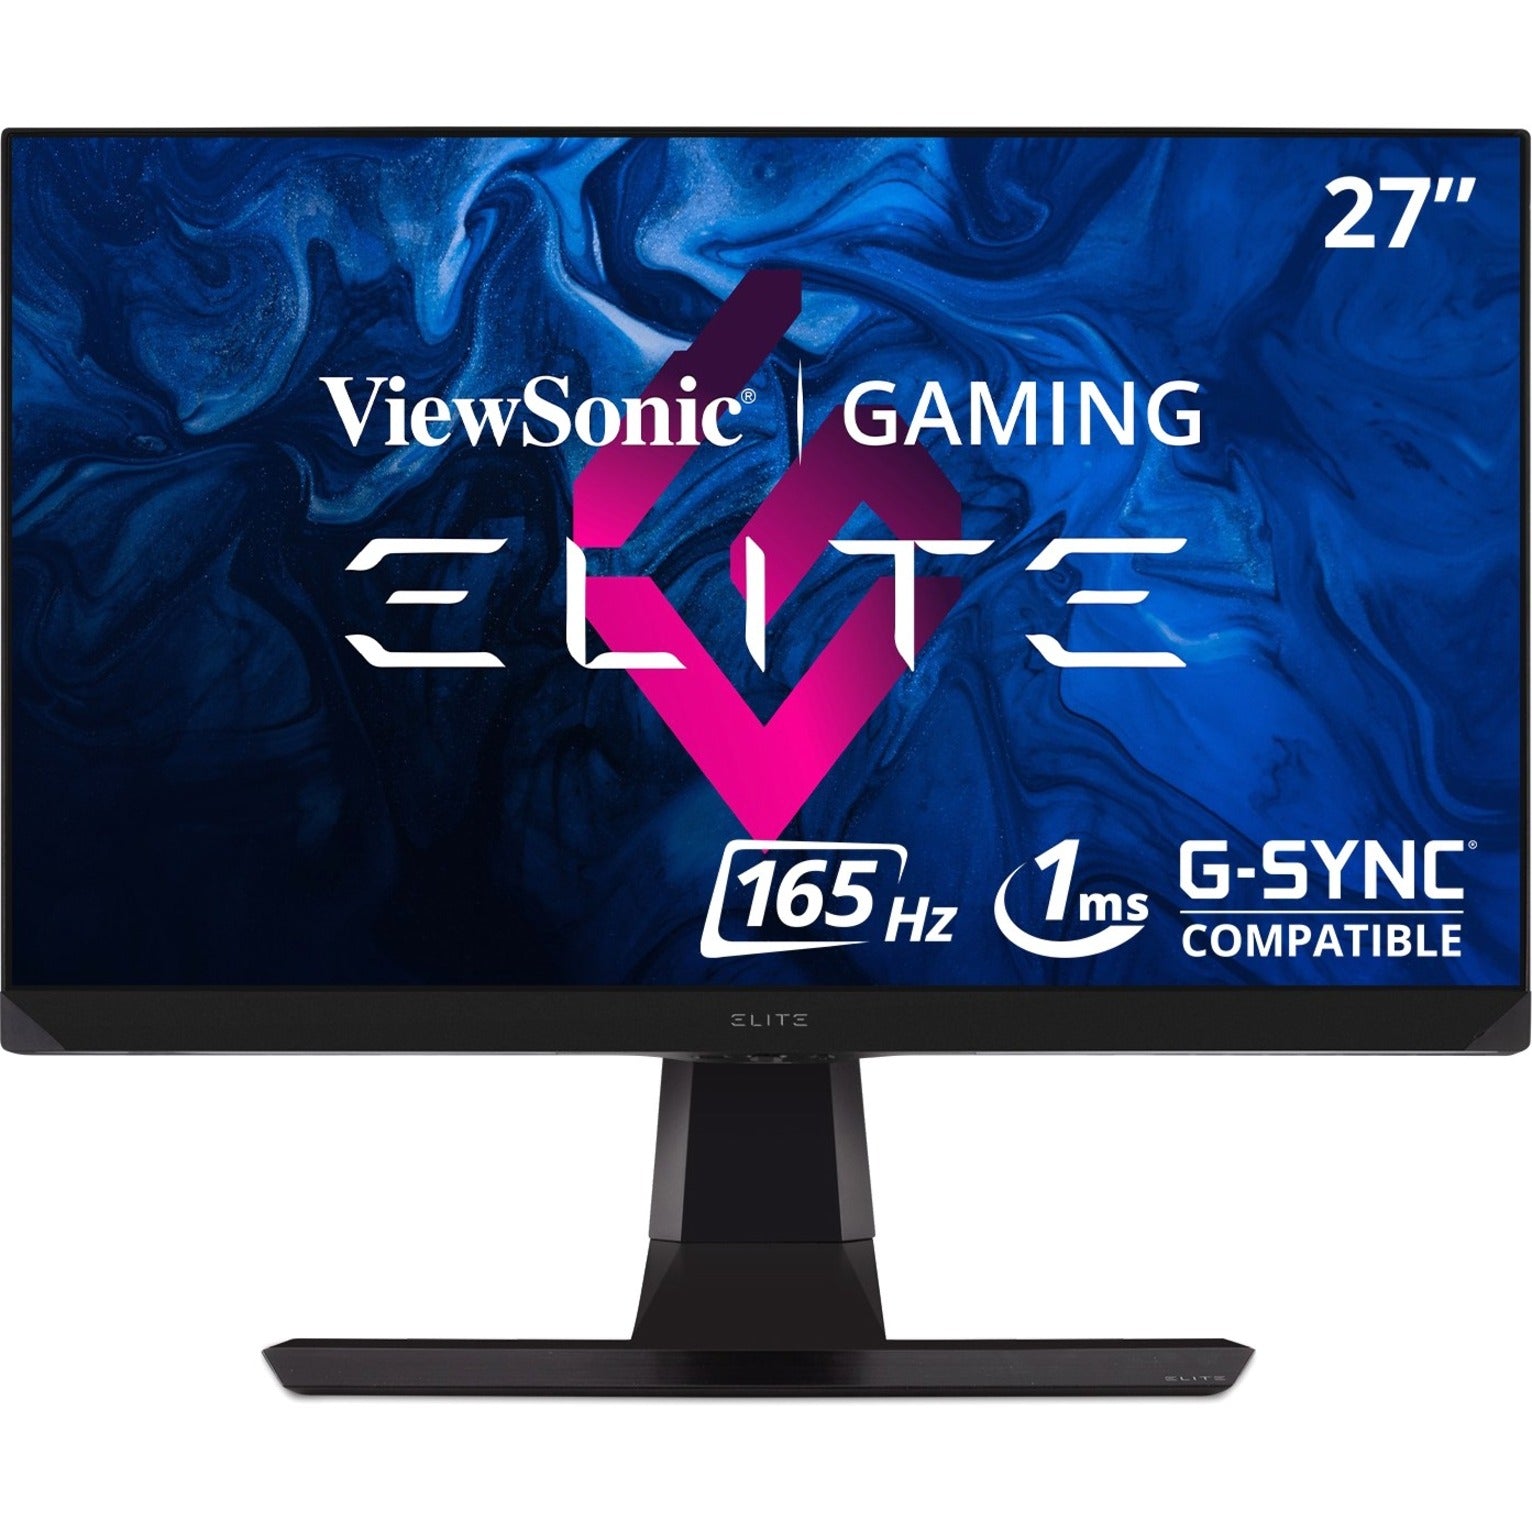 ViewSonic XG270Q Elite Widescreen LCD Monitor, 27 WQHD 1ms 165Hz IPS Gaming Monitor